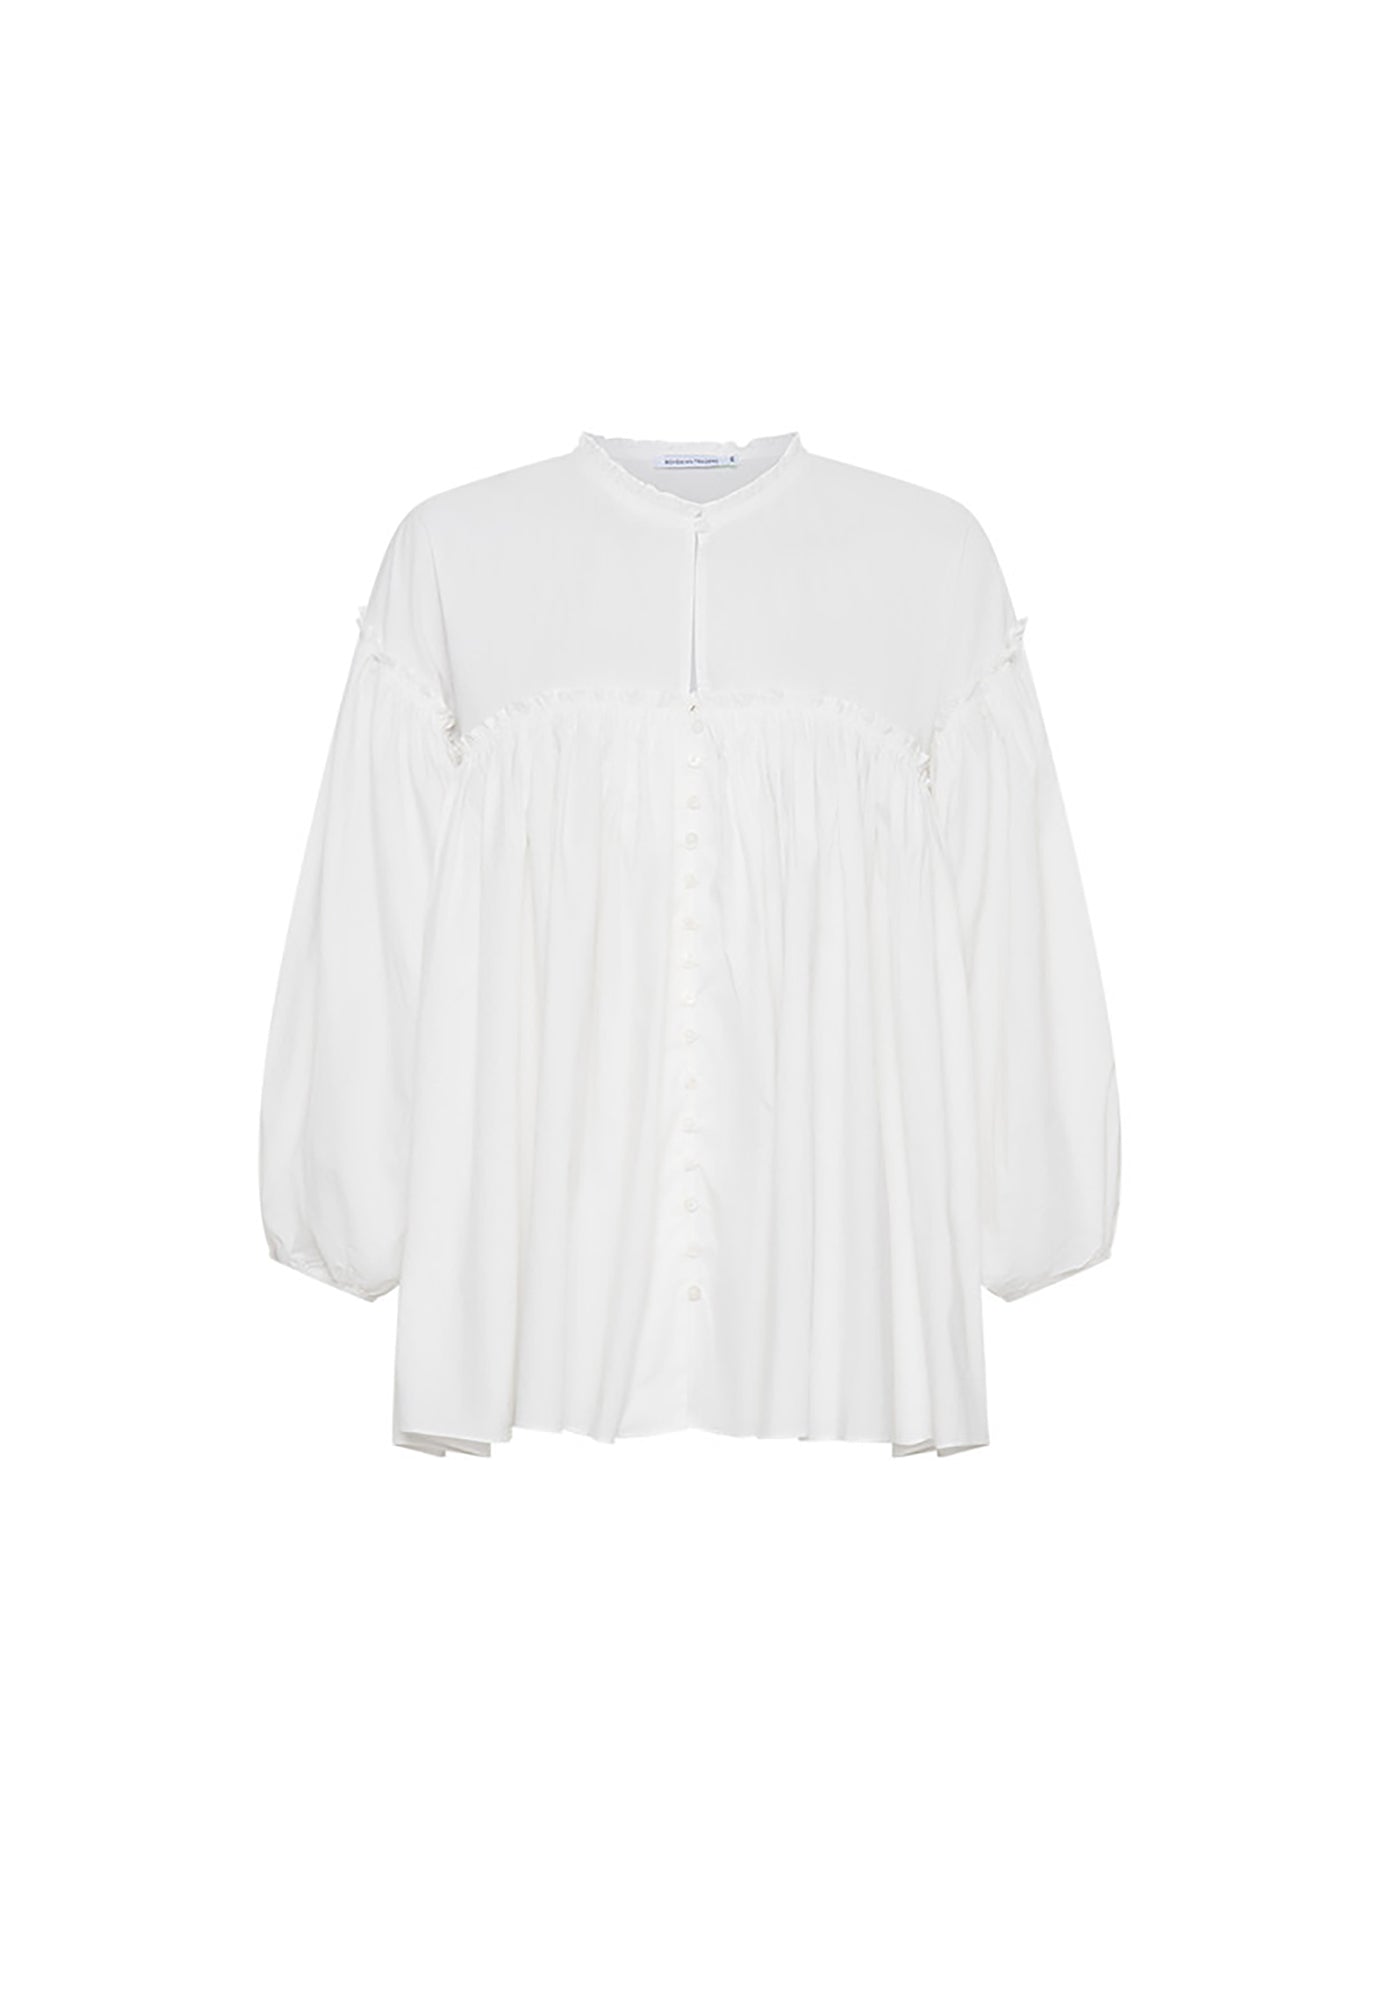 bohemian traders - romantic blouse - white